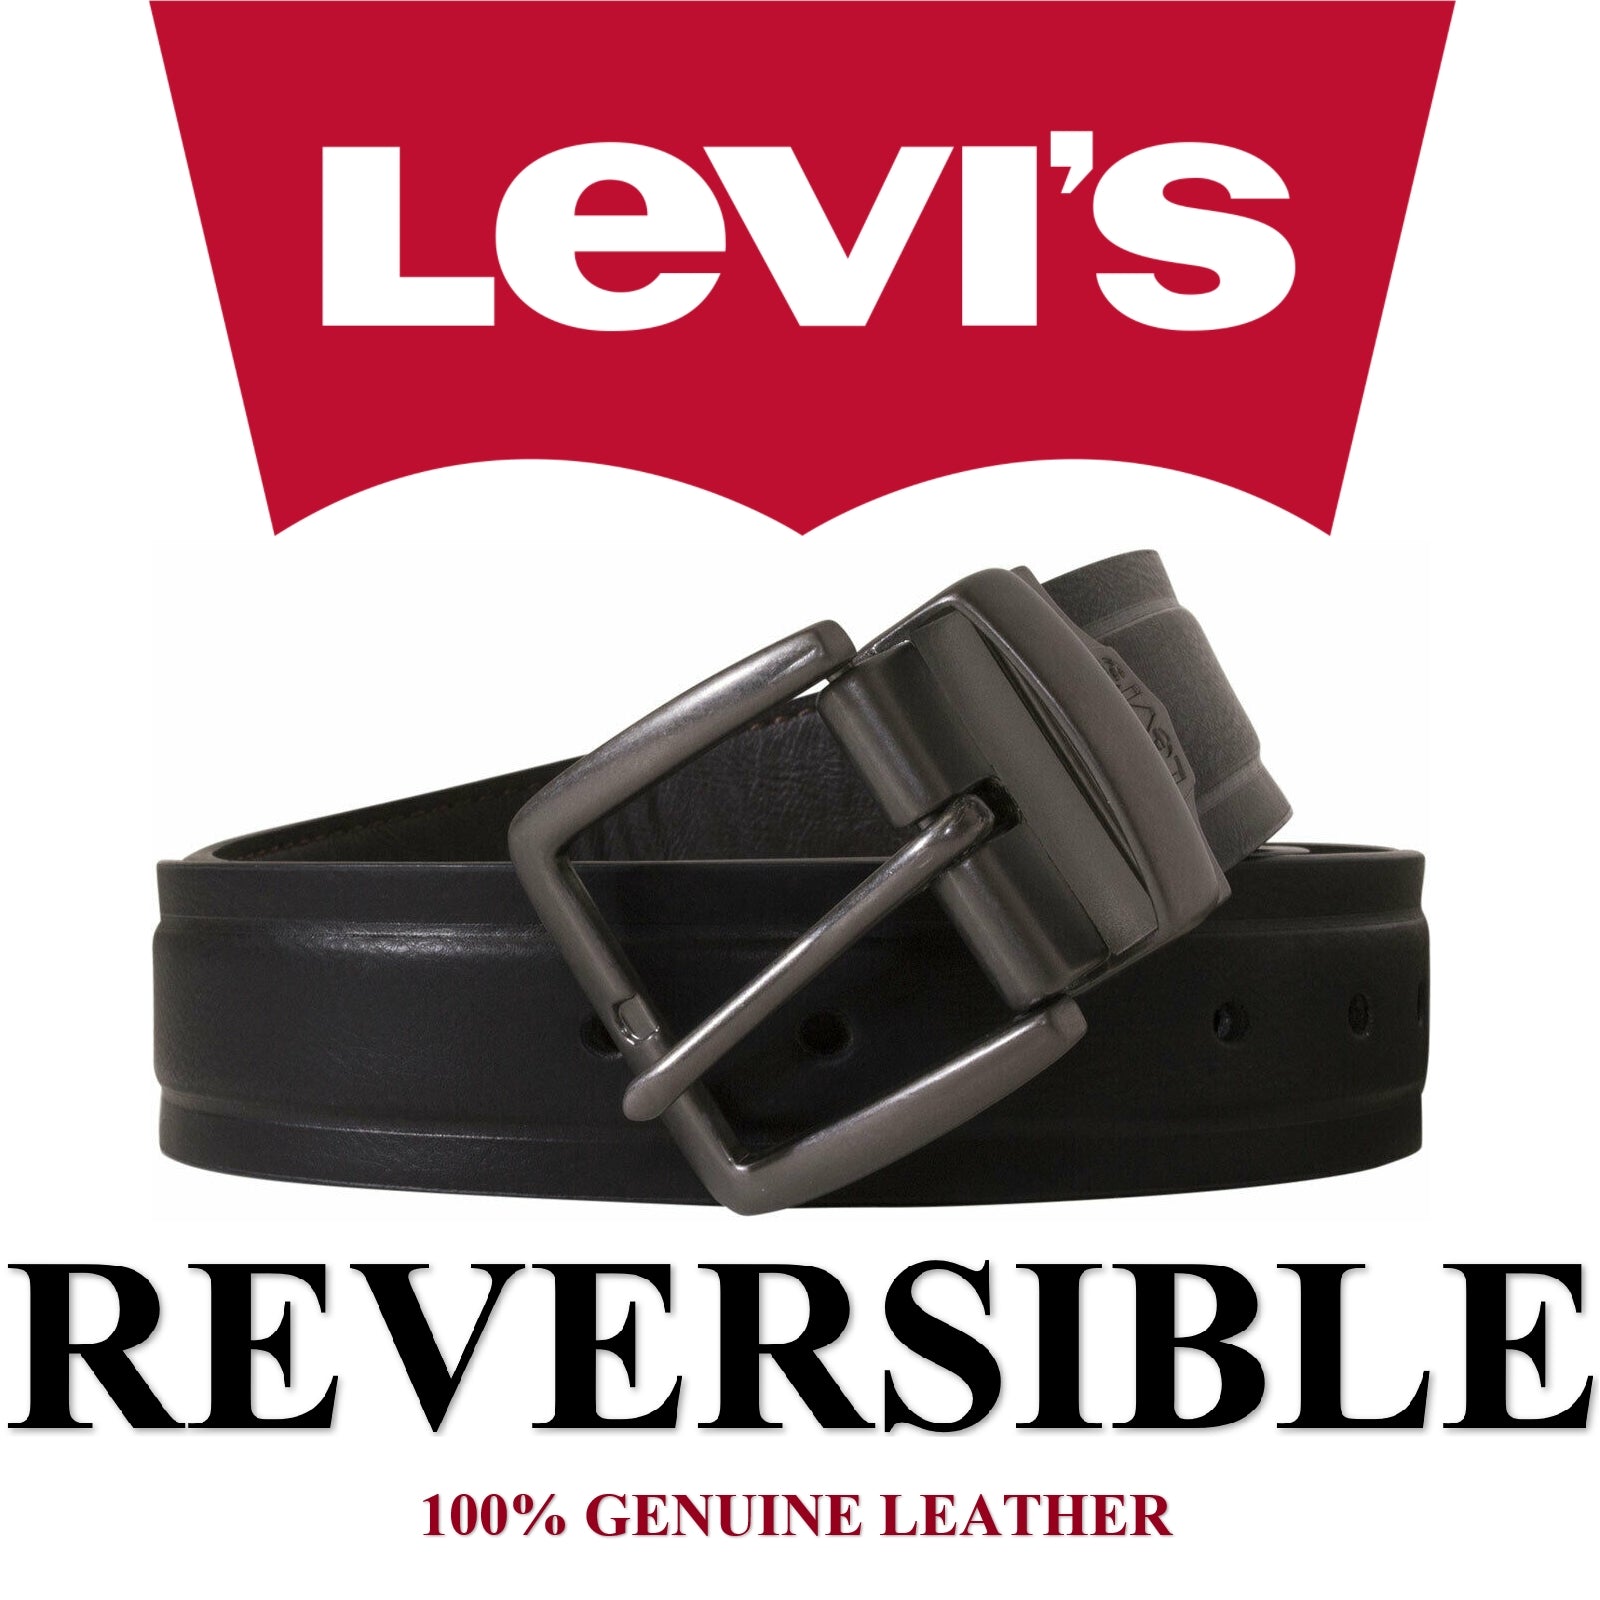 Levi's Men's Reversible Casual Jeans Belt, Brown/Black Casual